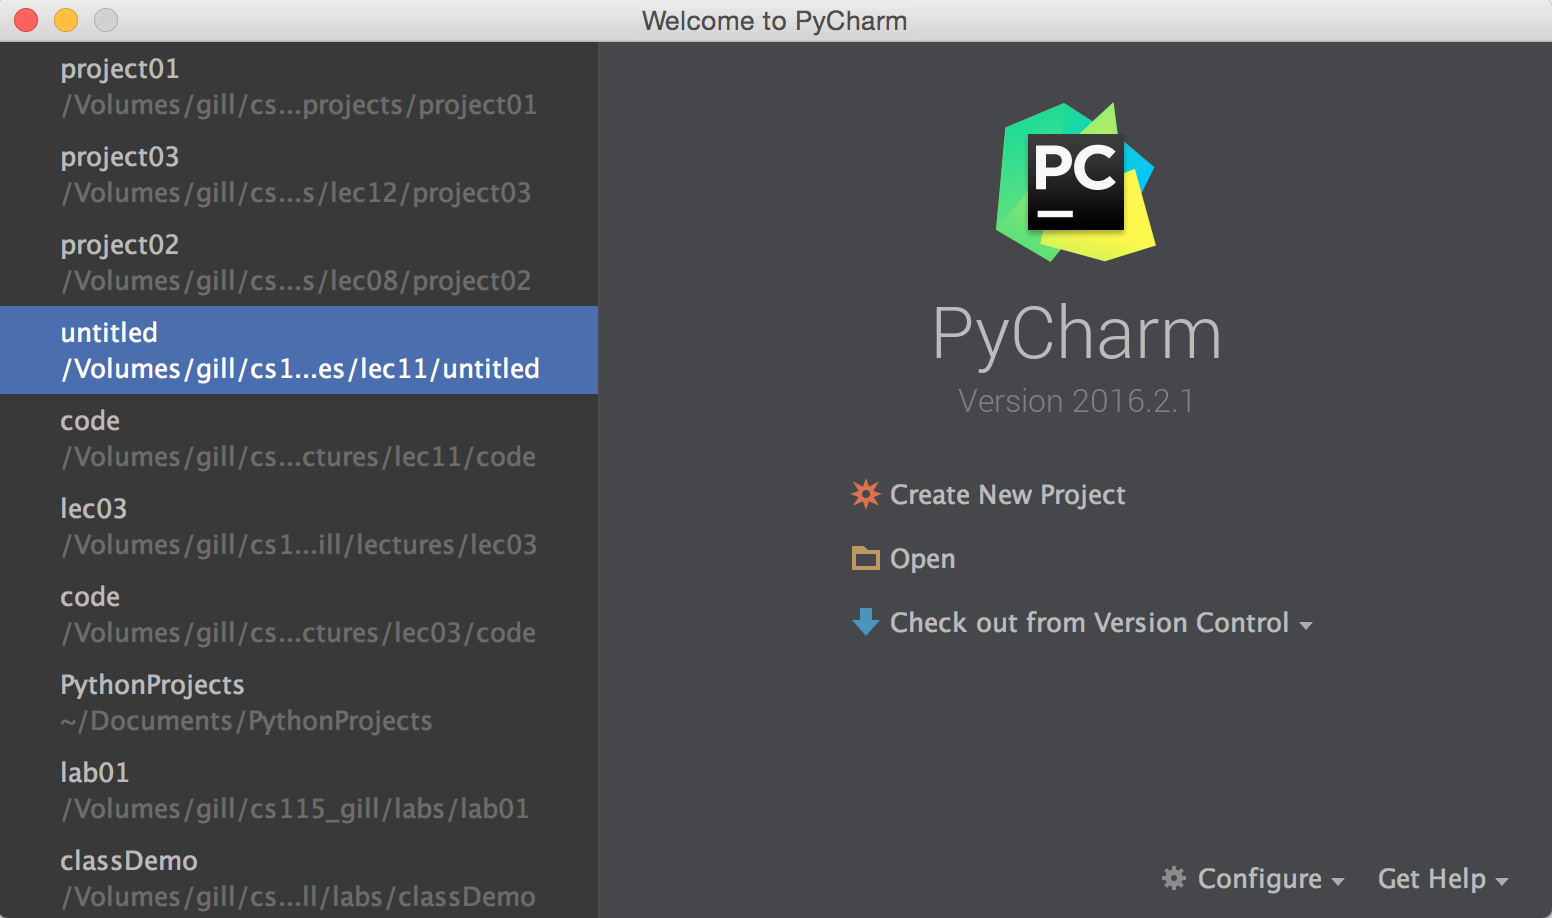 PyCharm Welcome Screen